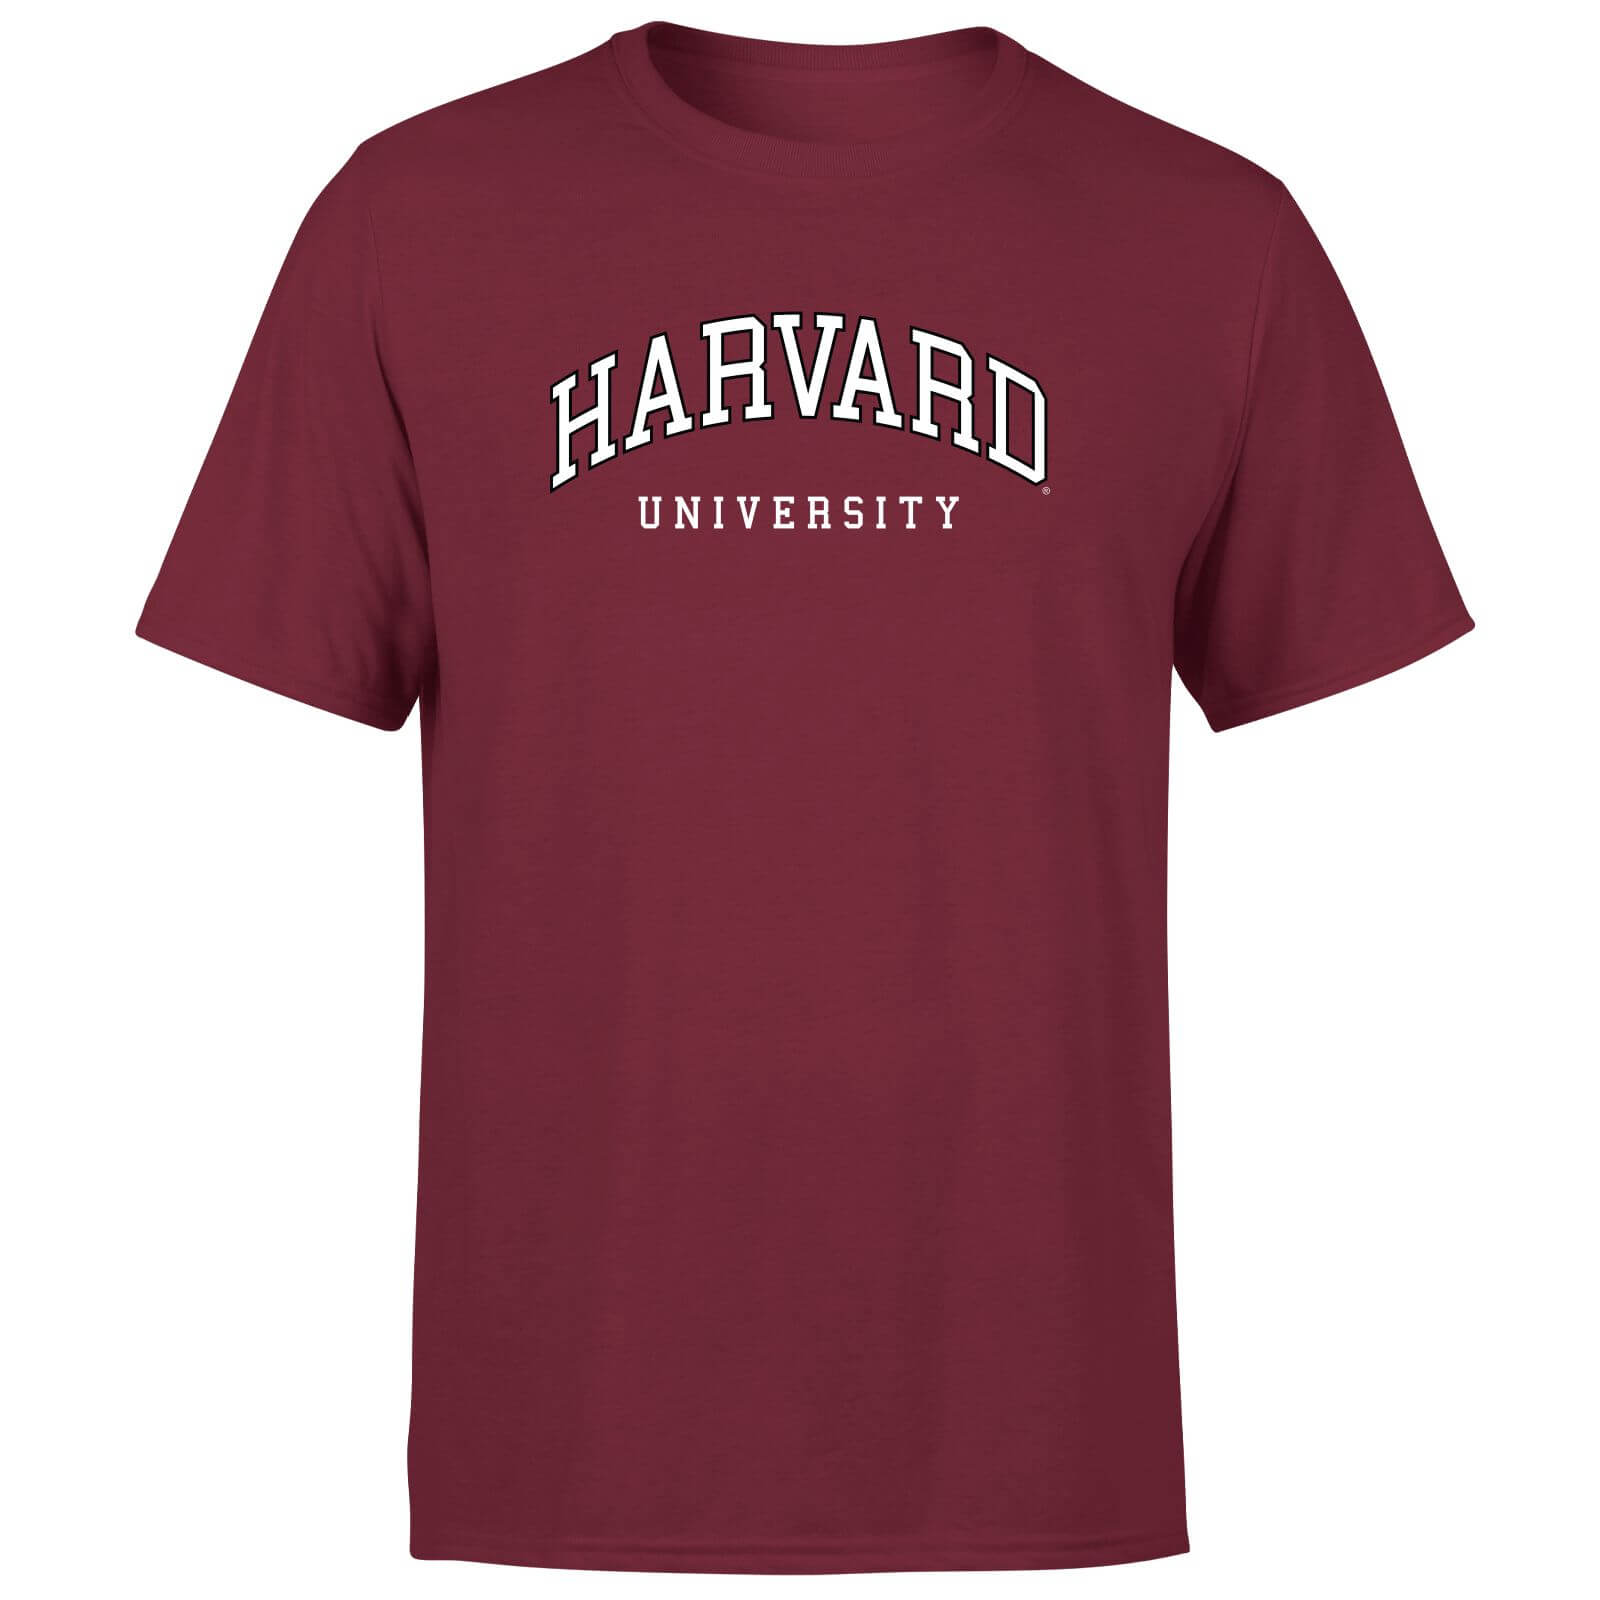 Harvard Burgundy Tee Men's T-Shirt - Burgundy - XS